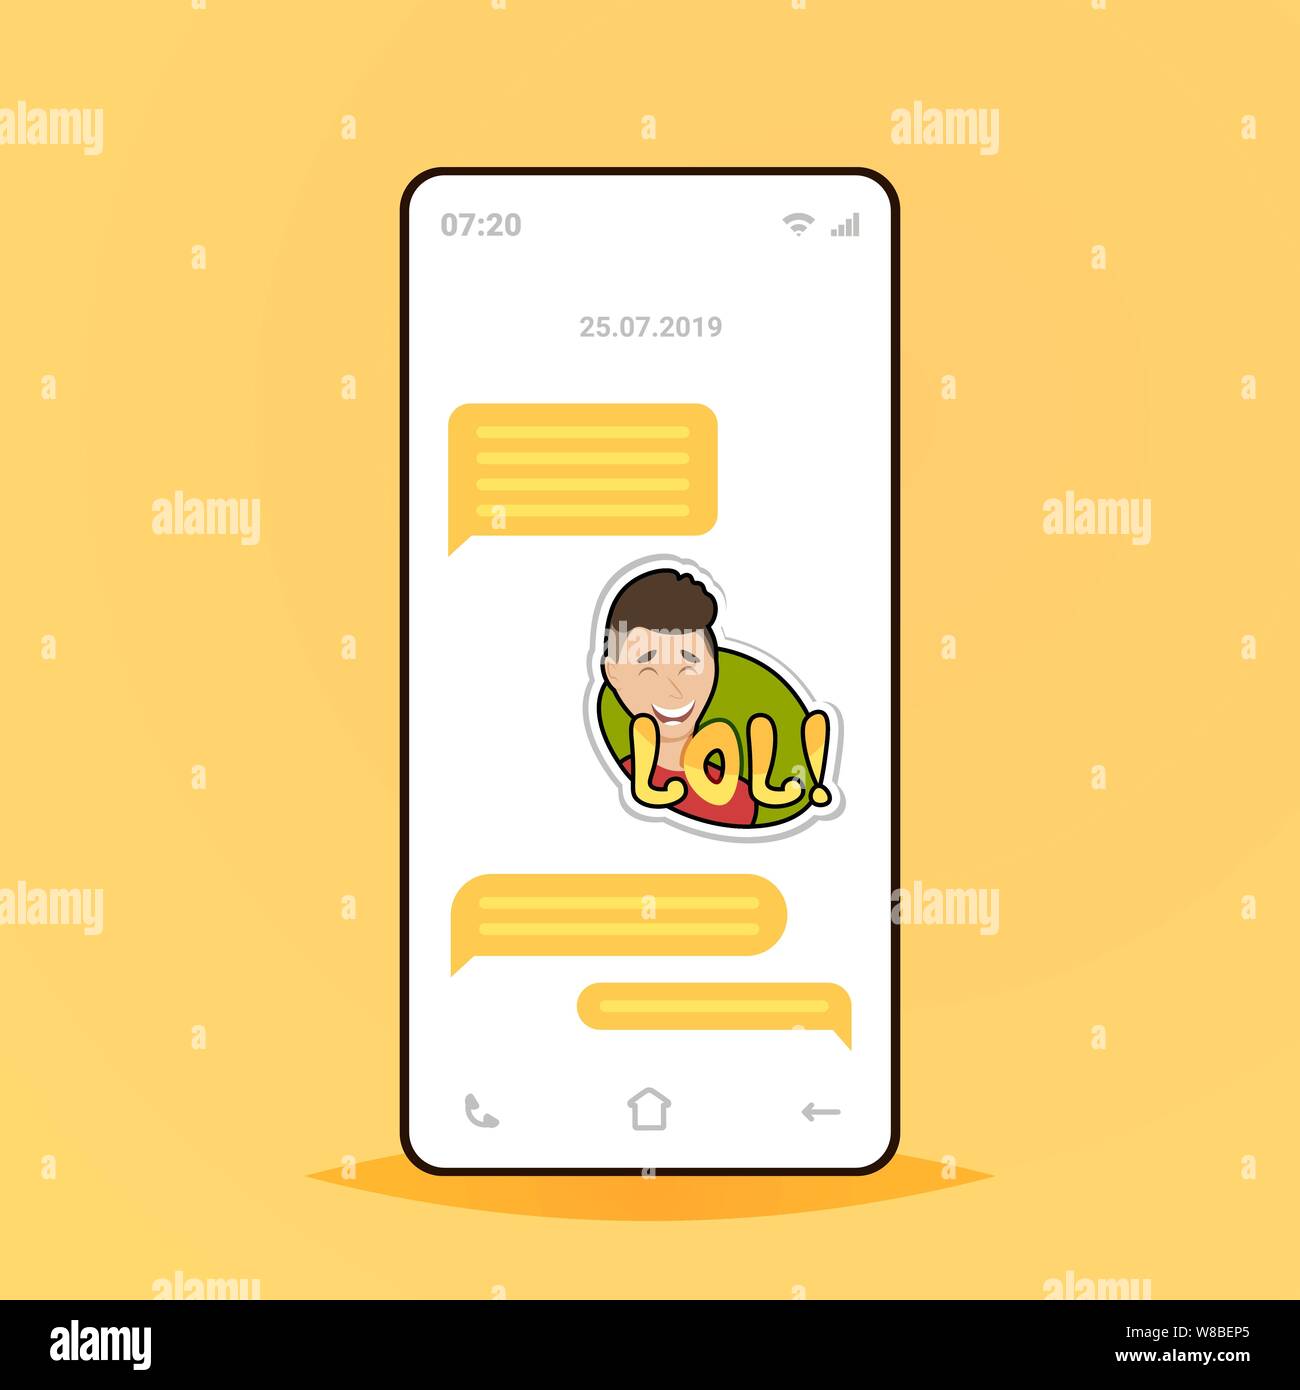 online conversation mobile chat app sending receiving messages with lol  sticker messenger application communication social media concept smartphone  sc Stock Vector Image & Art - Alamy